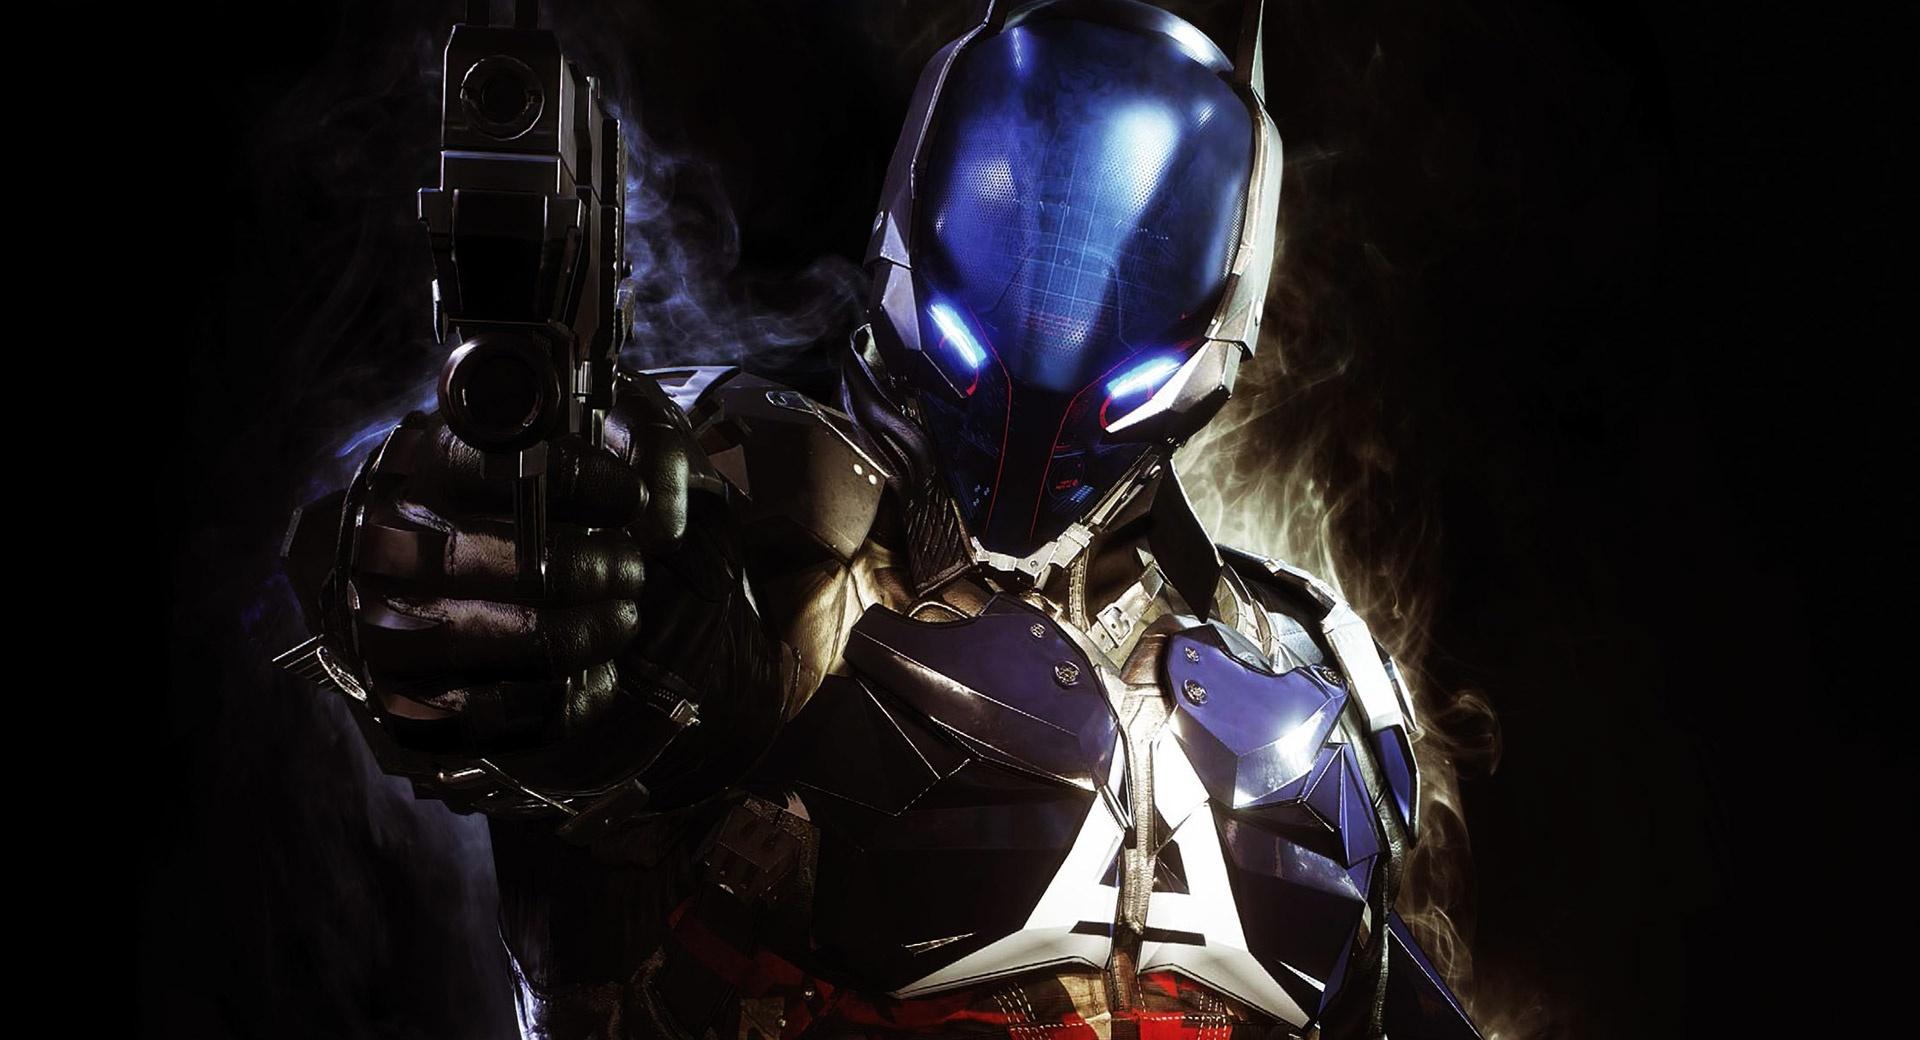 Batman Arkham Knight Pointing Gun at 1024 x 768 size wallpapers HD quality